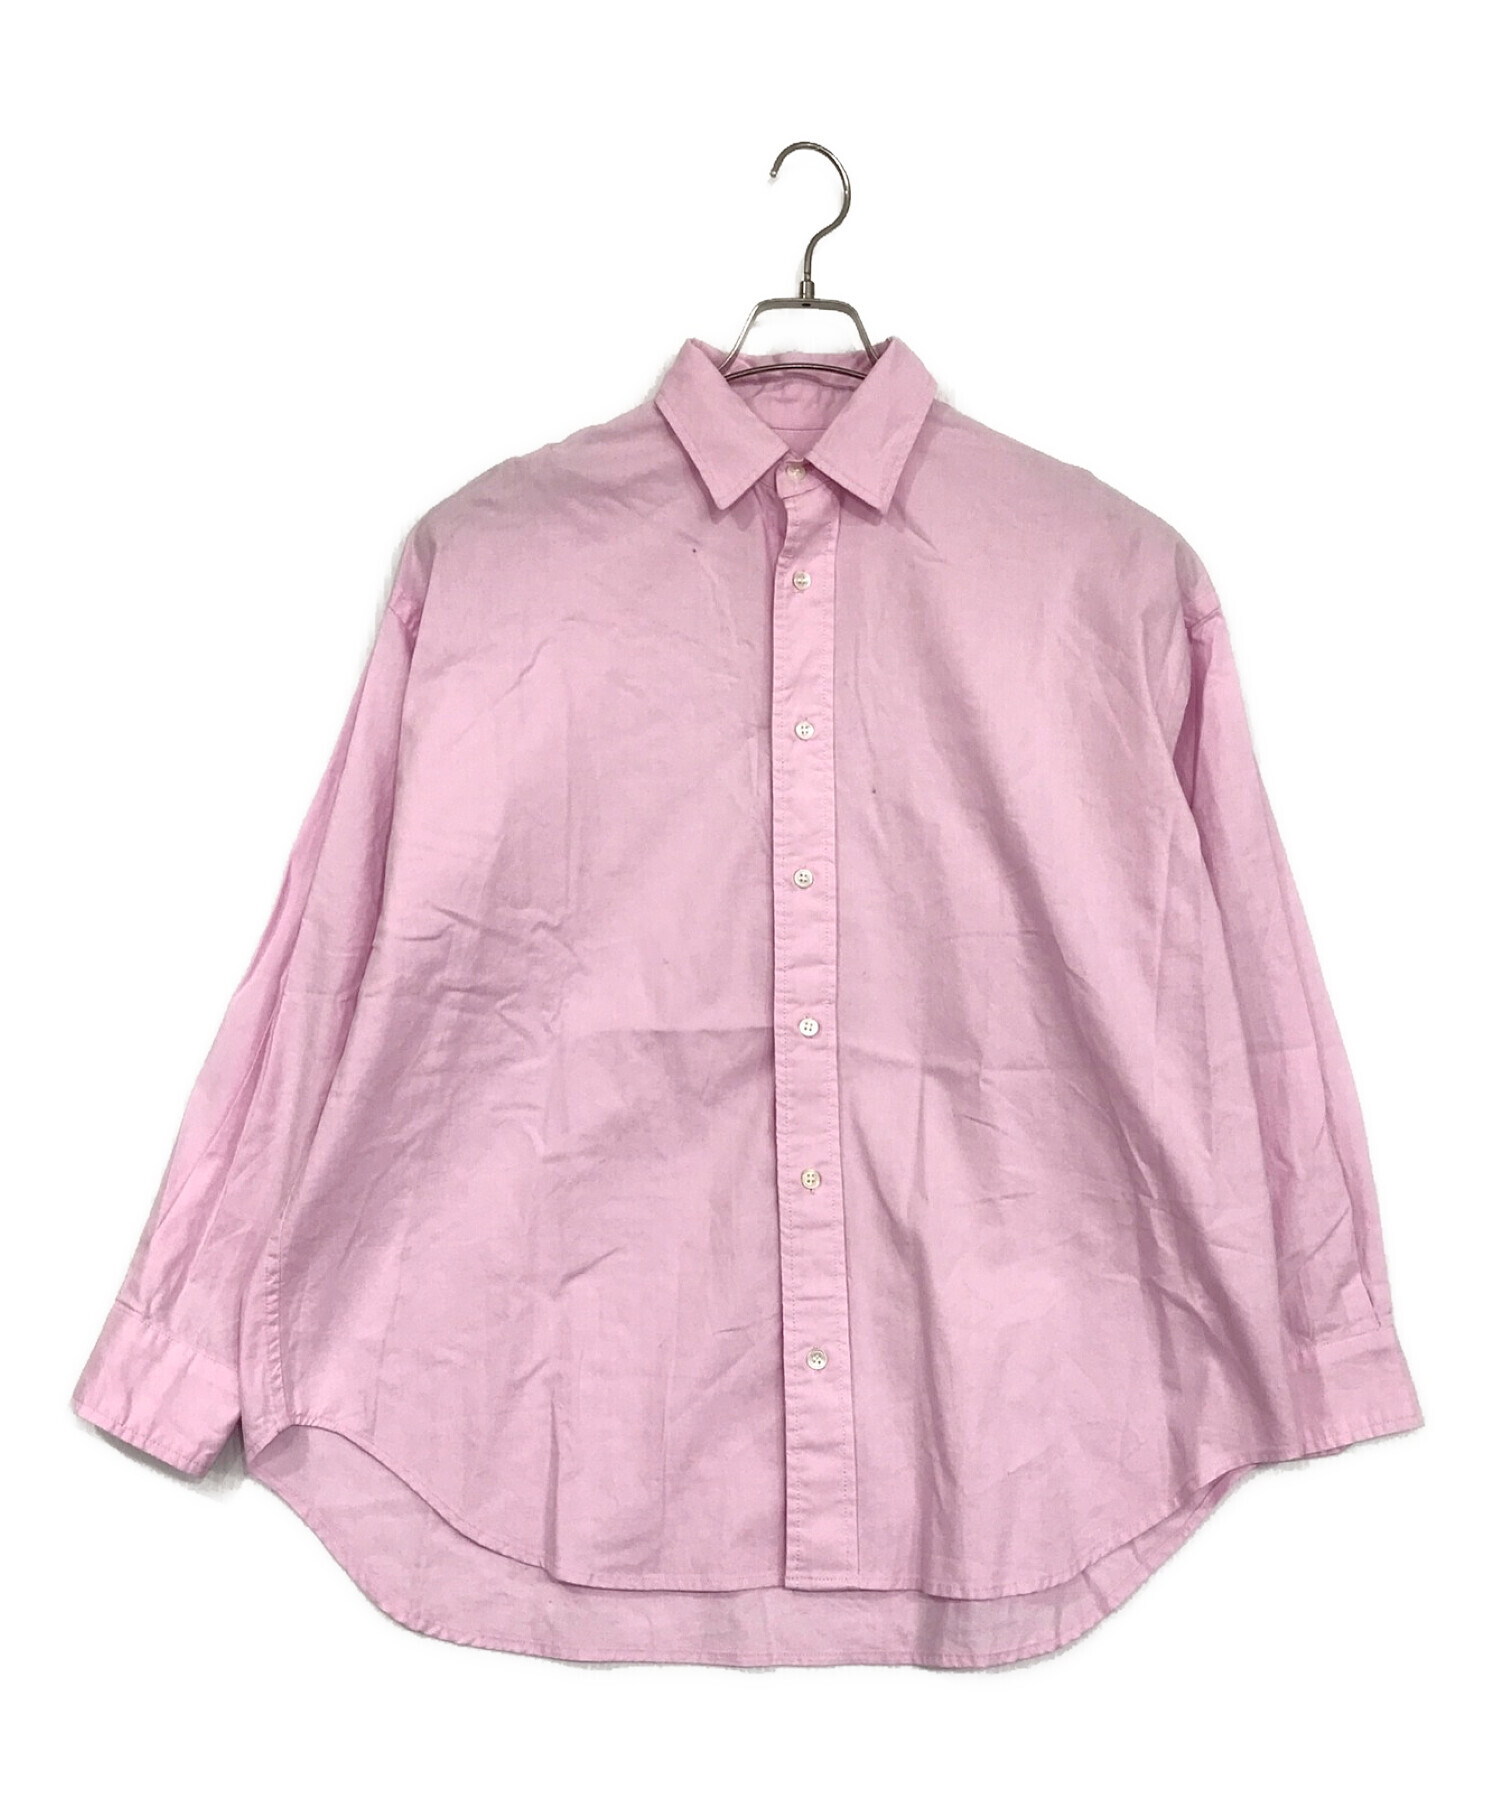 FRAMeWORK (フレームワーク) コットンレギュラーカラーシャツ ピンク サイズ:表記無し